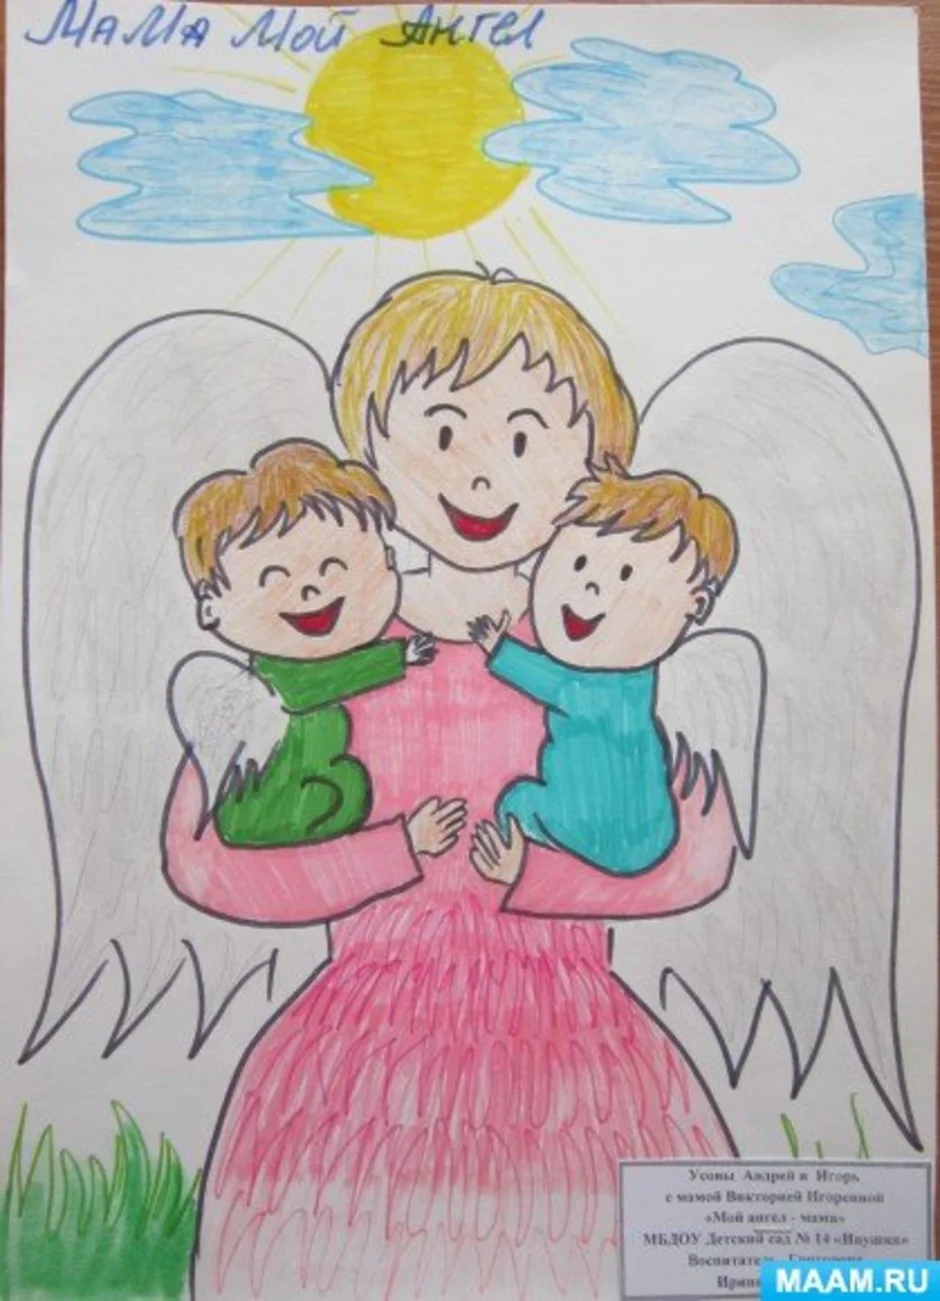 Название рисунков мама. Рисунок ко Дню матери. Рисунок на тему день матери. Рисунок маме на день матери. Детские рисунки ко Дню матери.